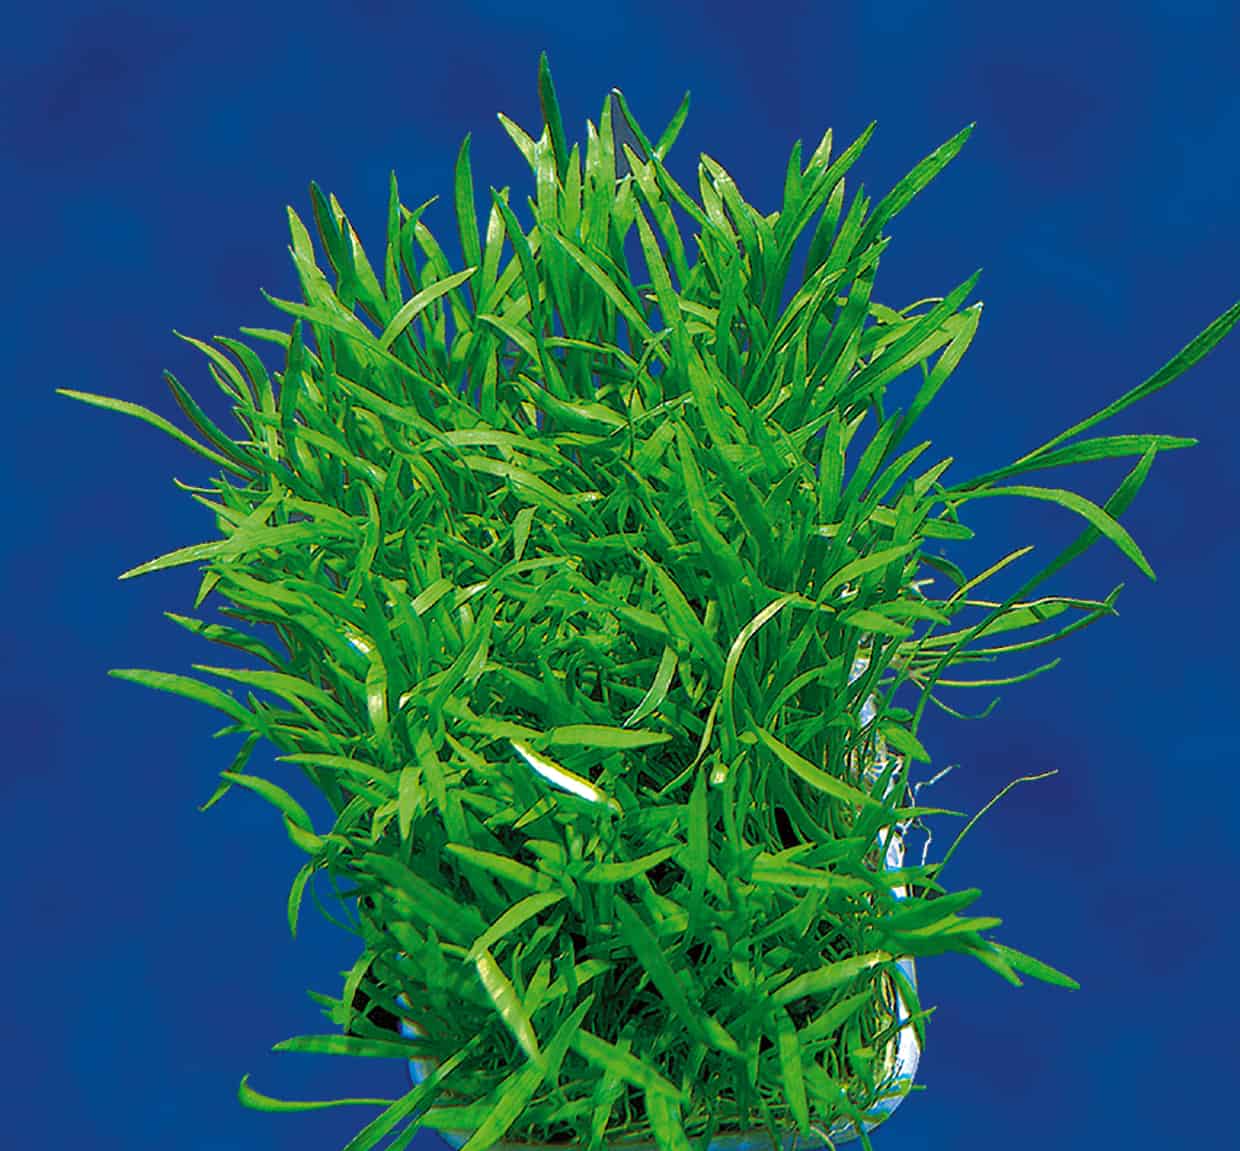 Lilaeopsis brasiliensis Graspflanze myfish Aus Freude an der